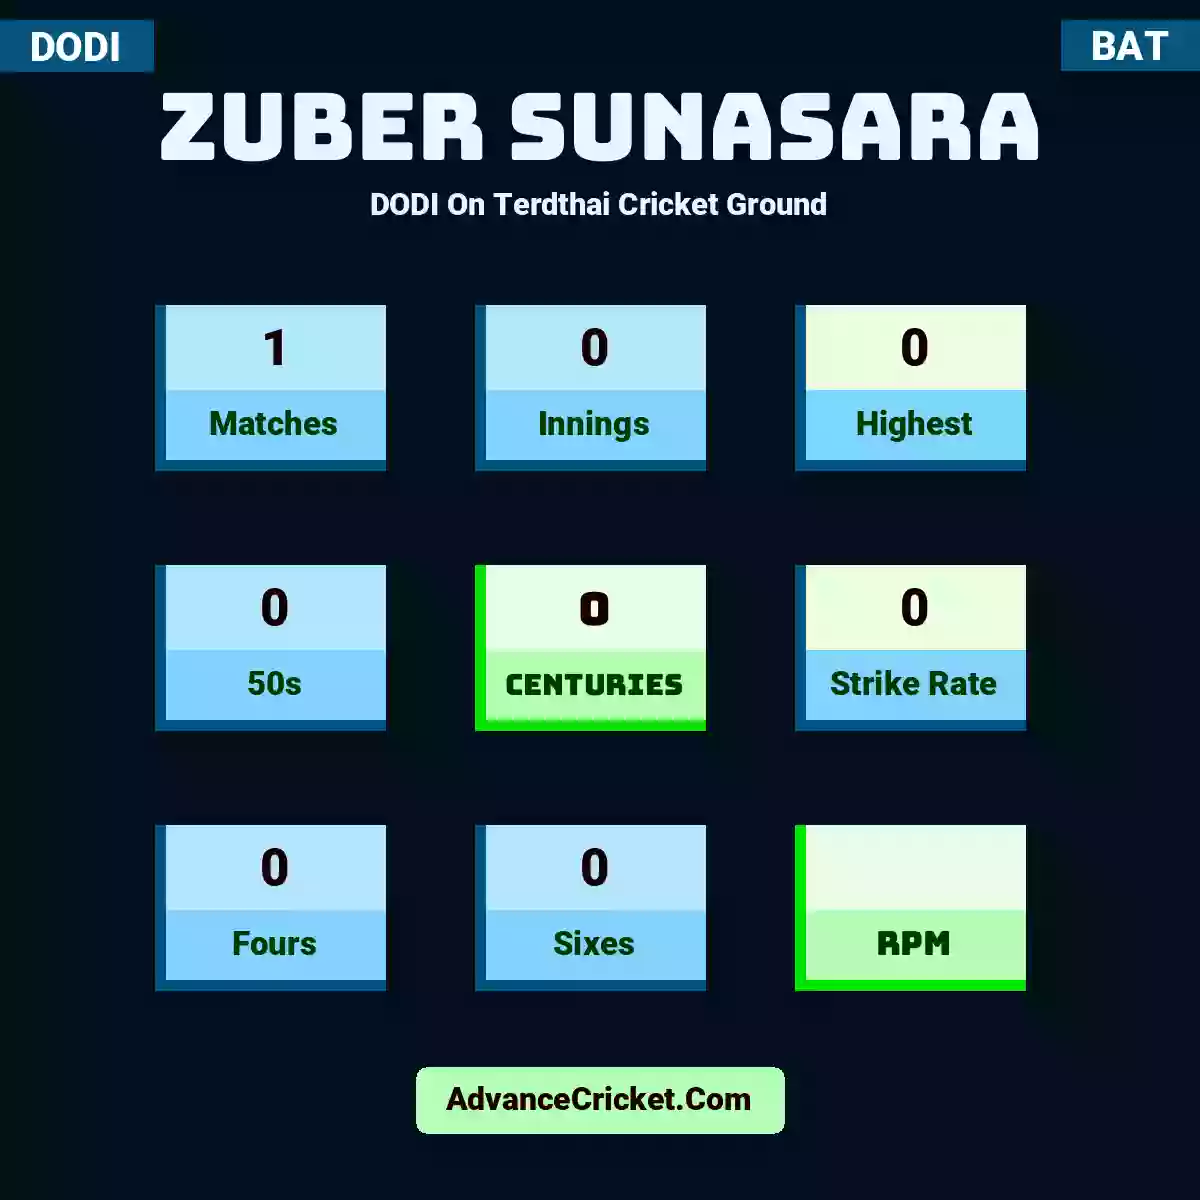 Zuber Sunasara DODI  On Terdthai Cricket Ground, Zuber Sunasara played 1 matches, scored 0 runs as highest, 0 half-centuries, and 0 centuries, with a strike rate of 0. Z.Sunasara hit 0 fours and 0 sixes.